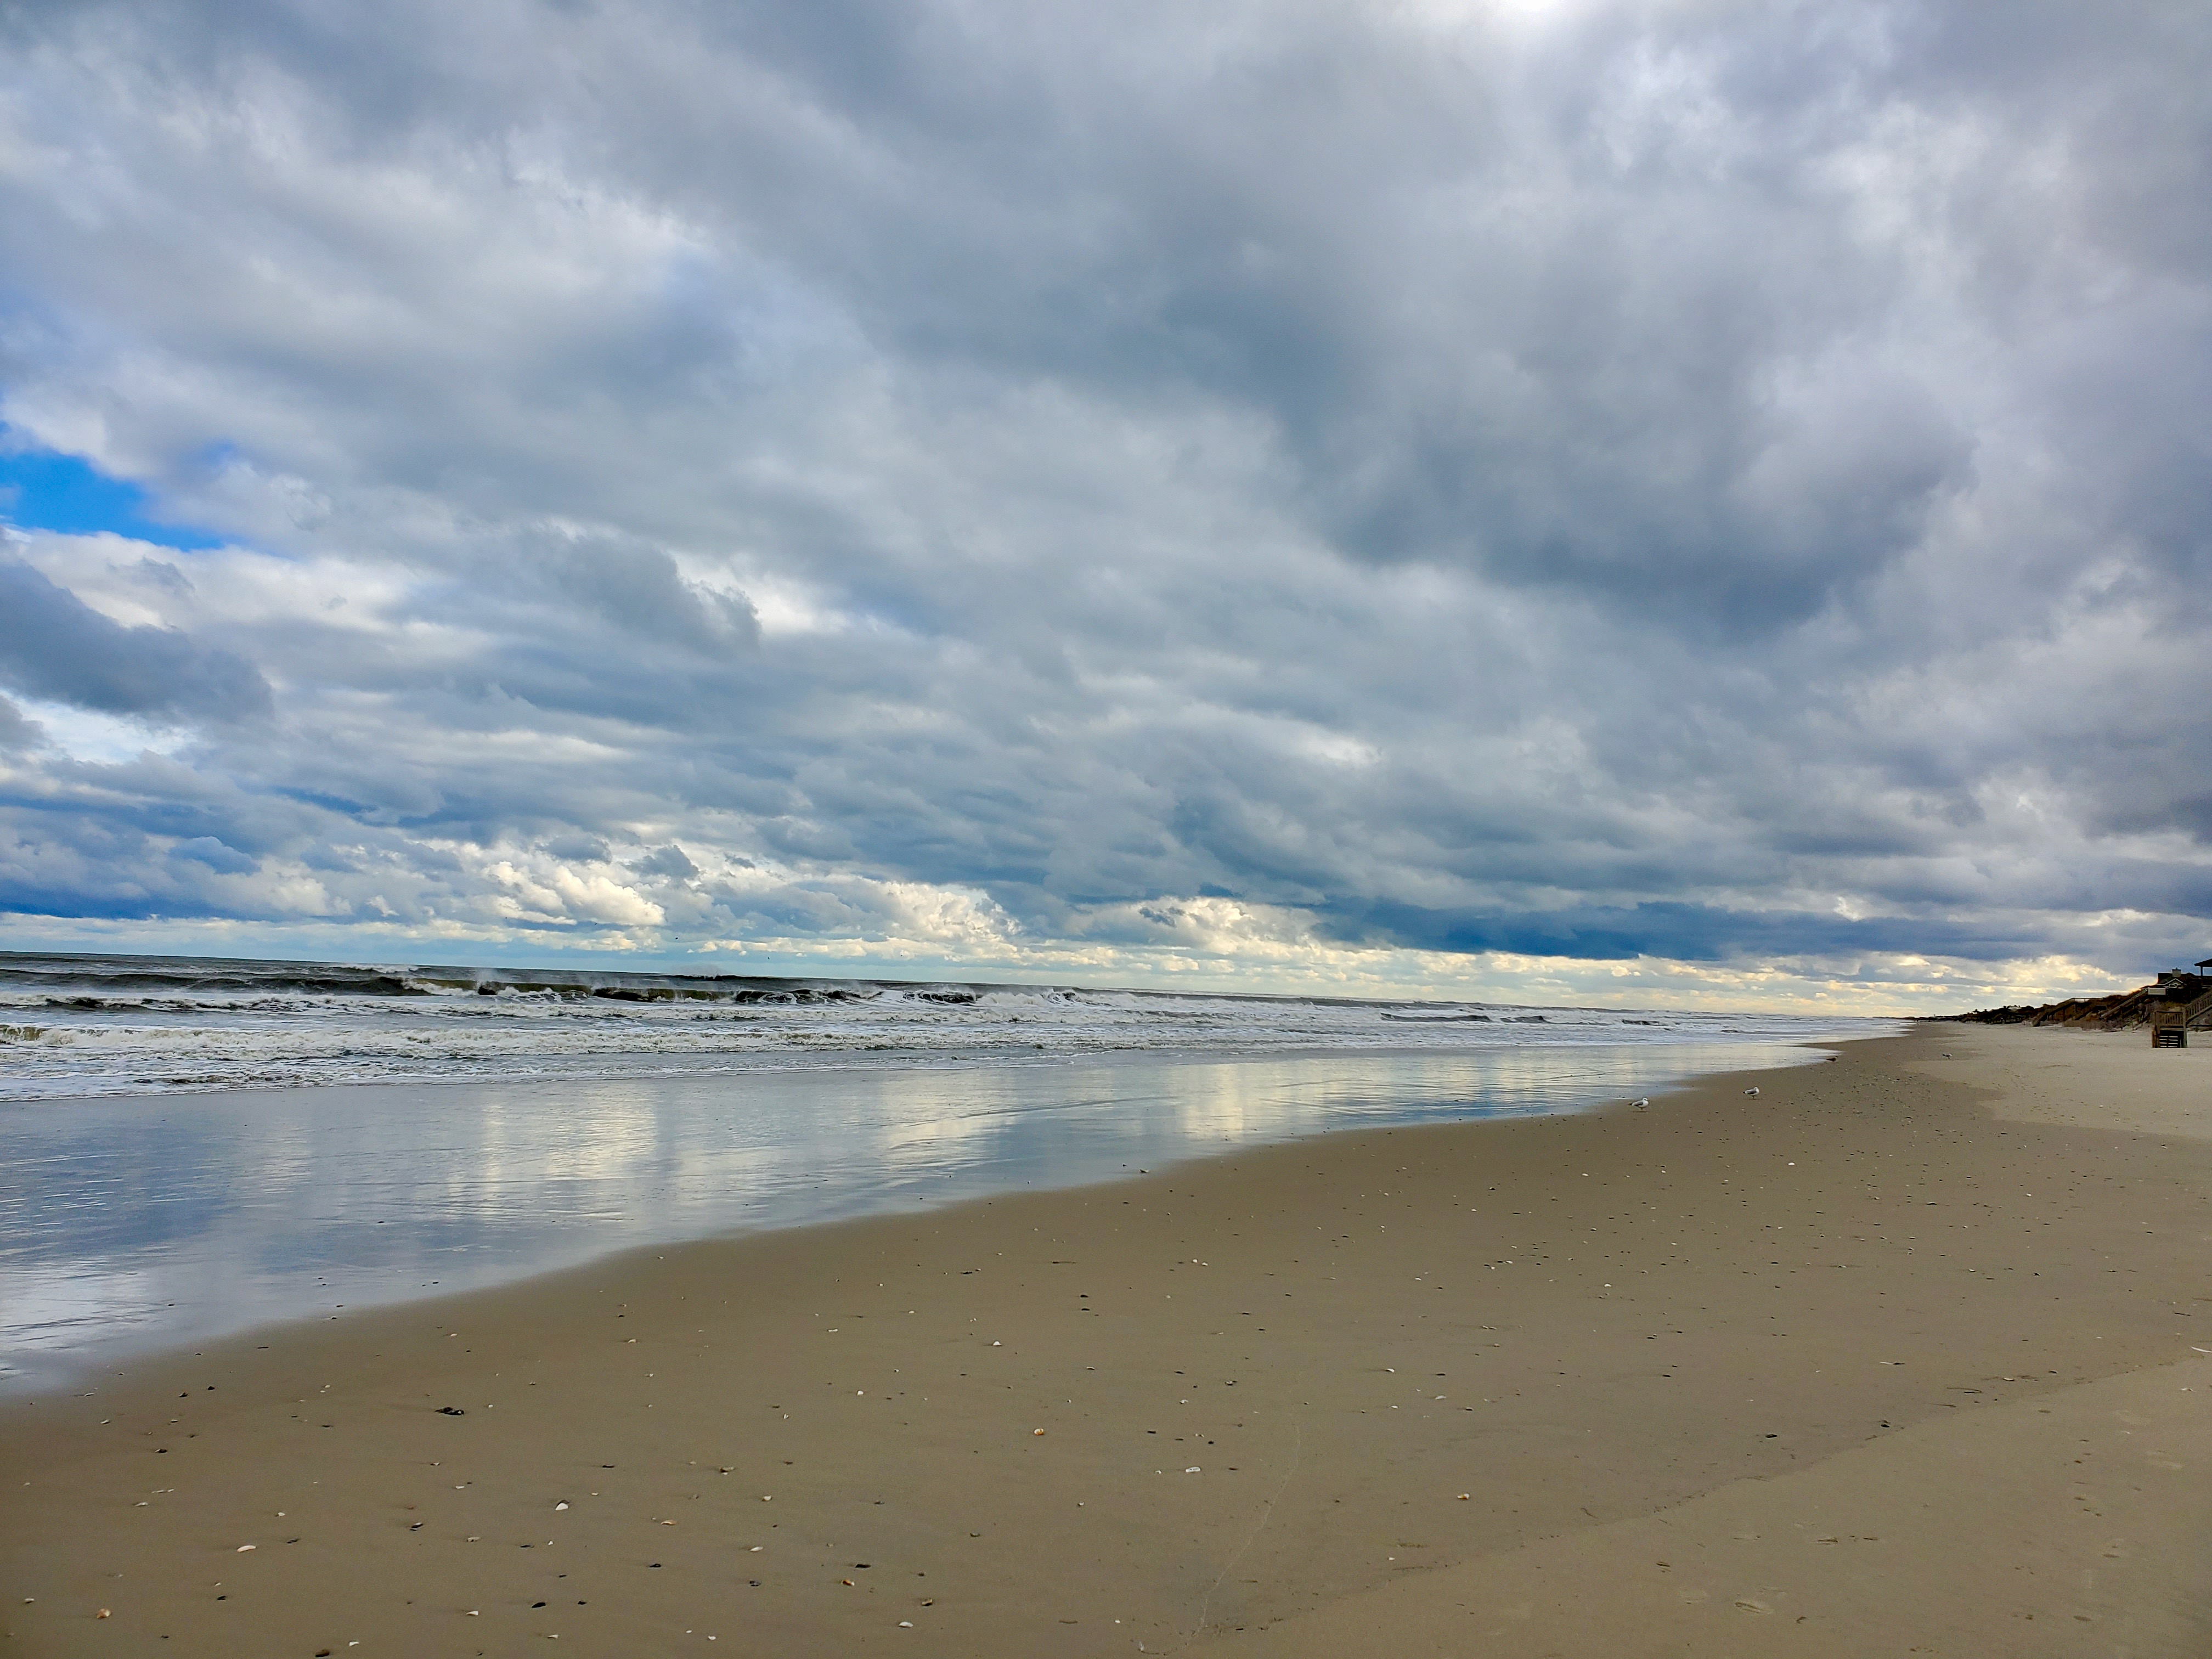 Brisk weather on Corolla Beach, North Carolina. My own photo.